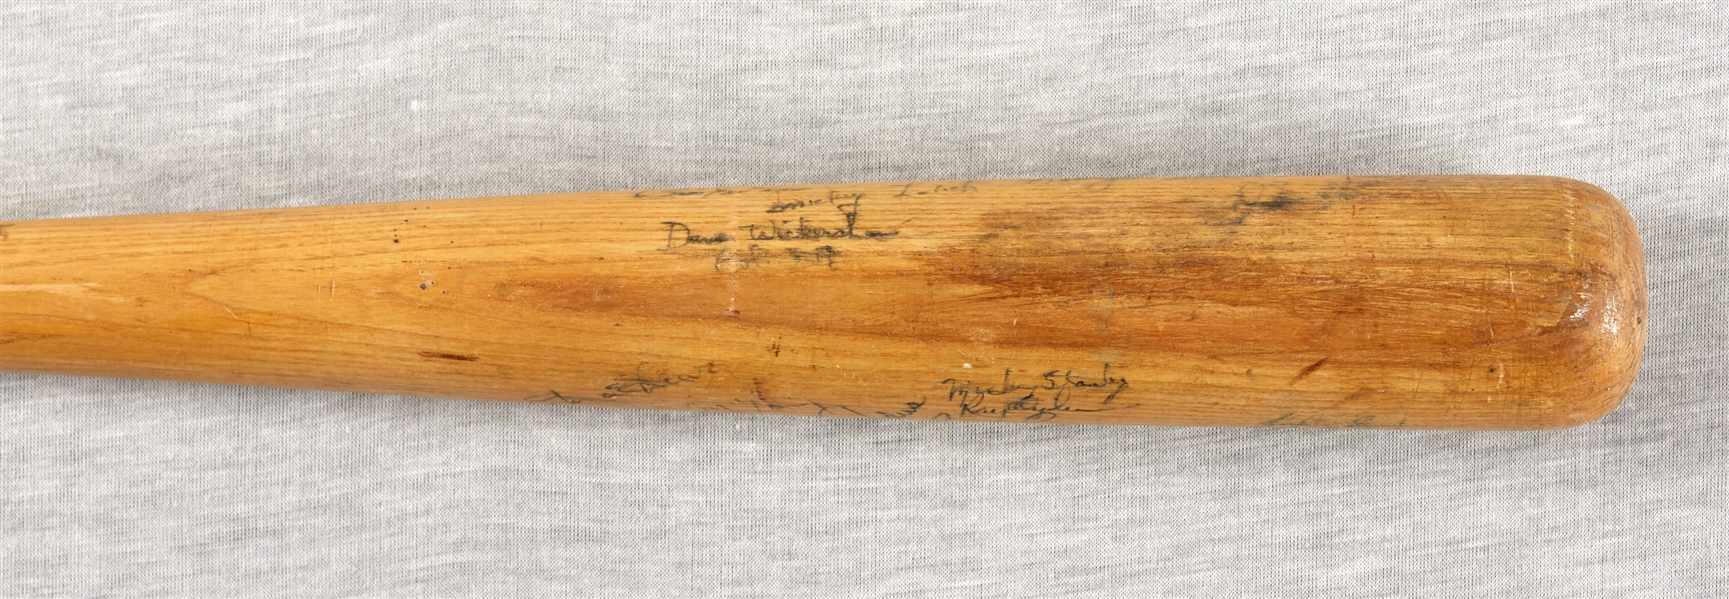 1967 Detroit Tigers Team-Signed Jim Price H&B Bat (BAS)